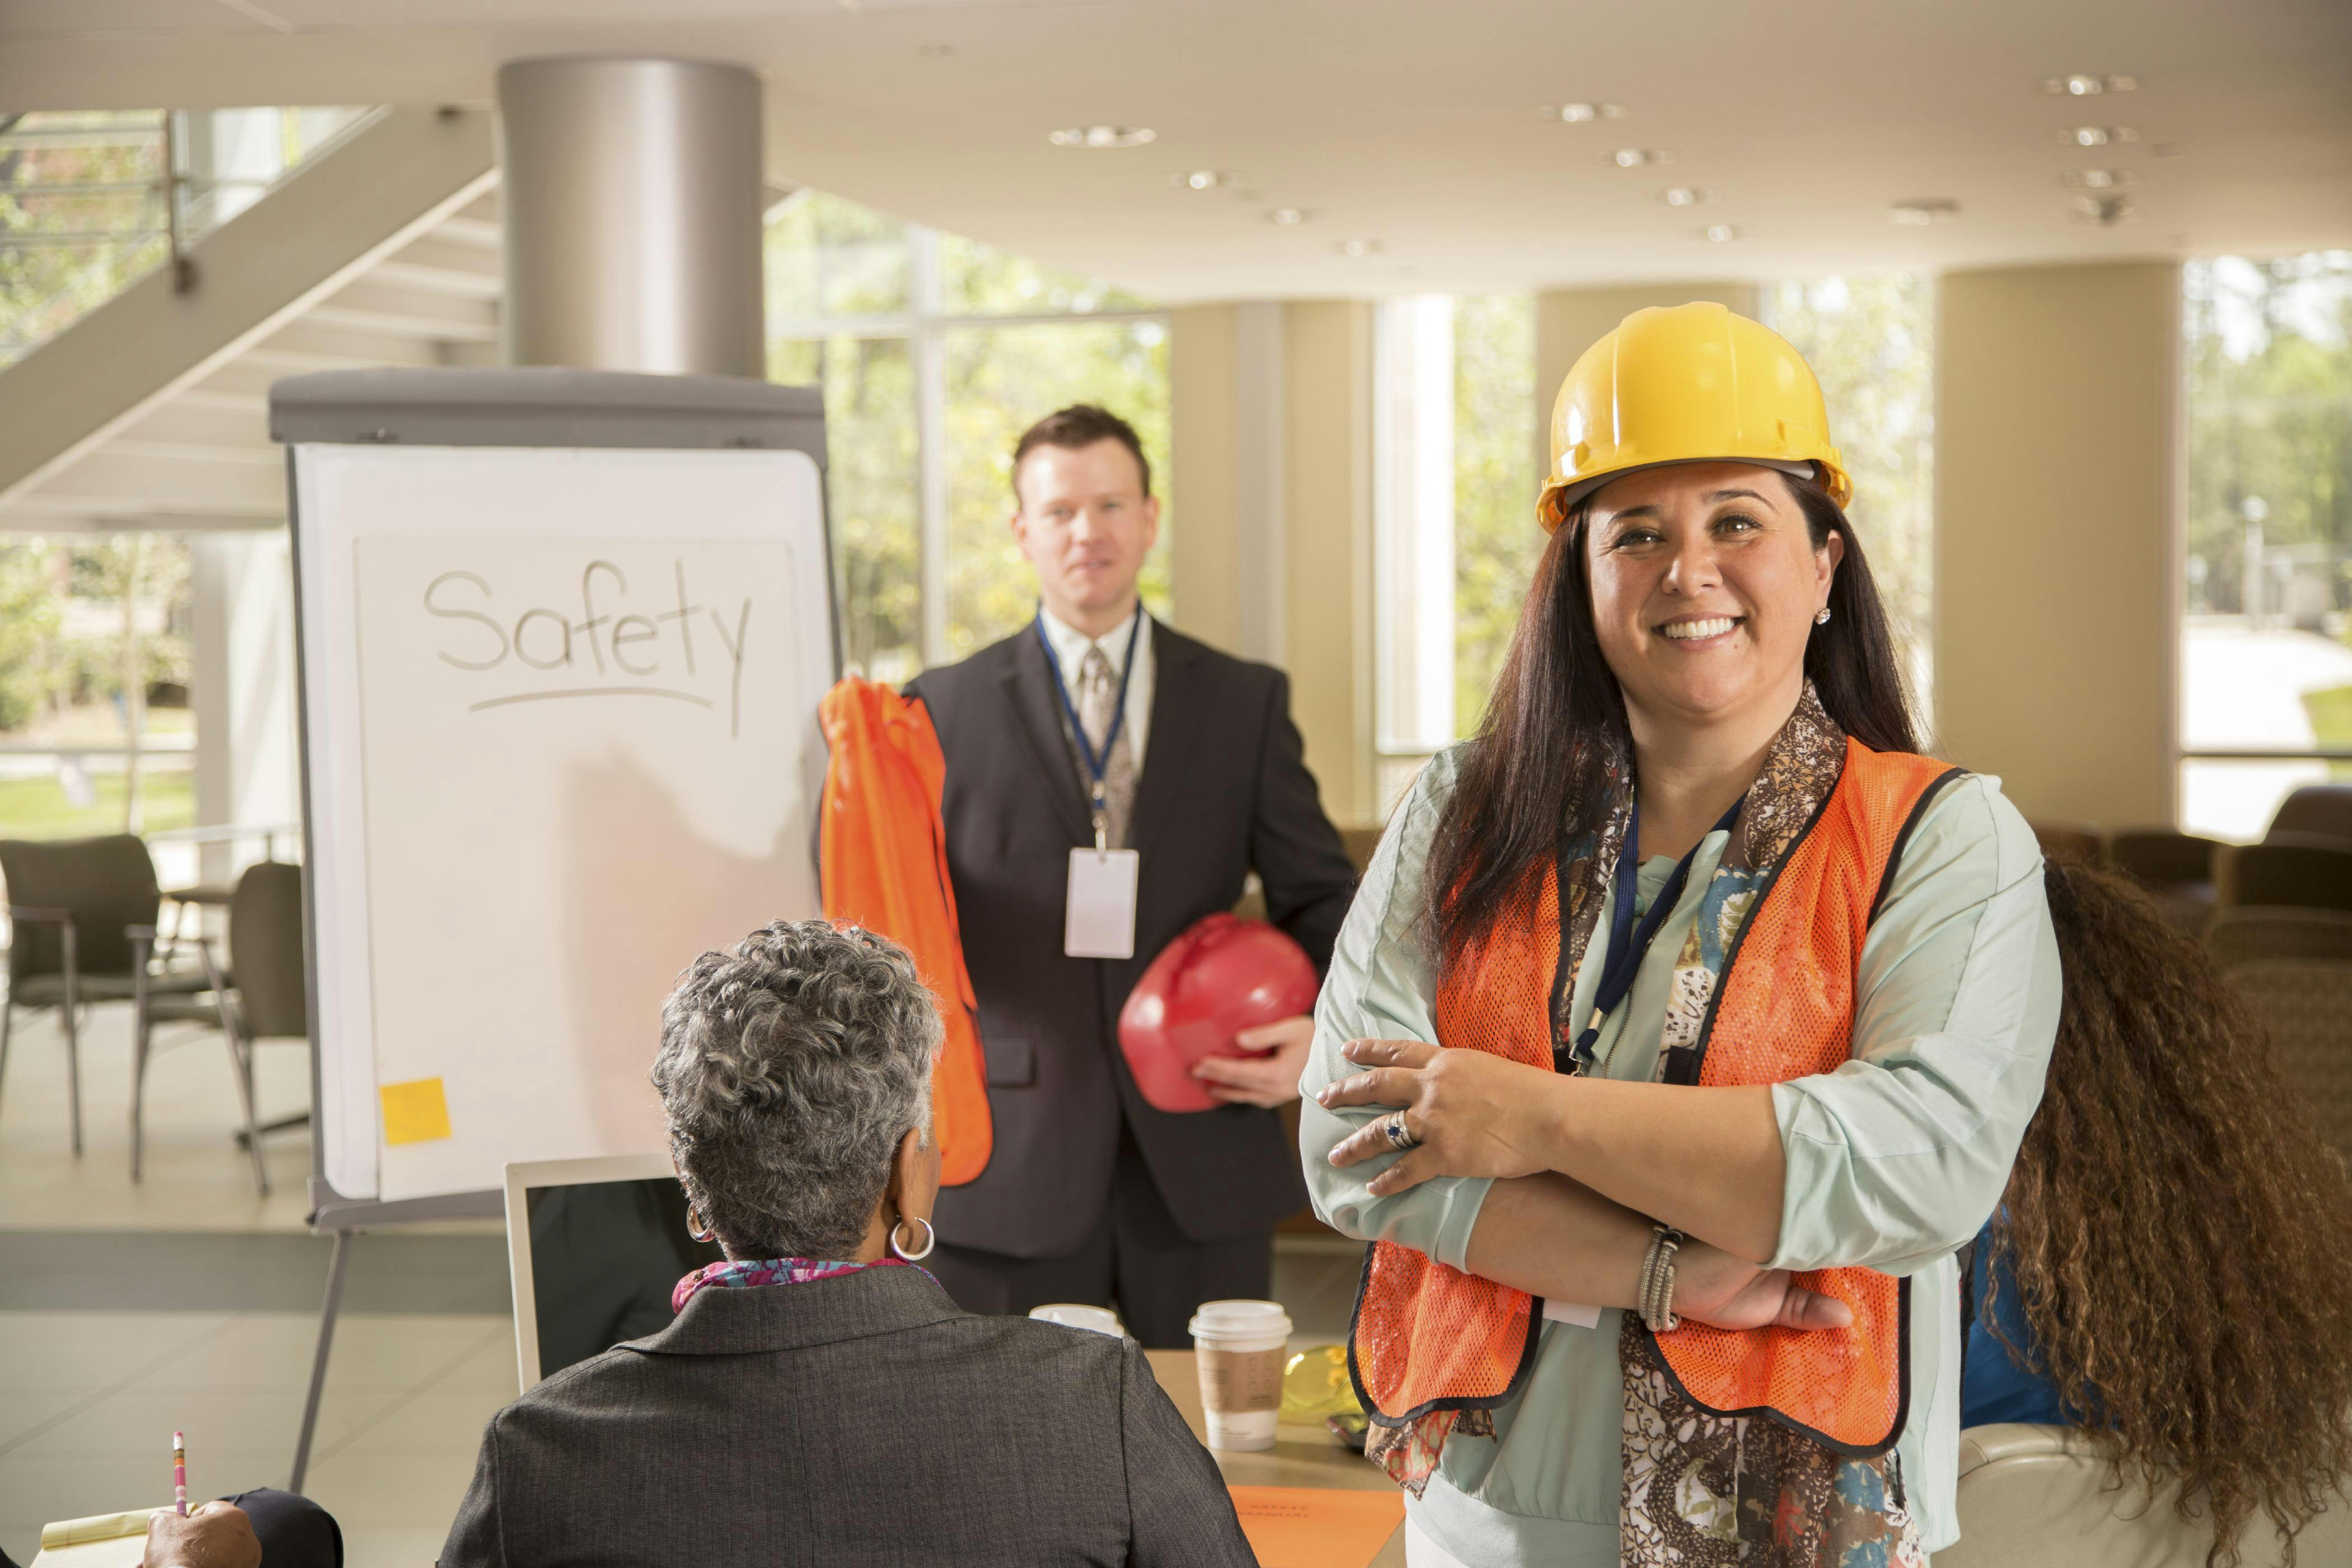 Metro Signal Safety Leadership Training - Melbourne CBD - August